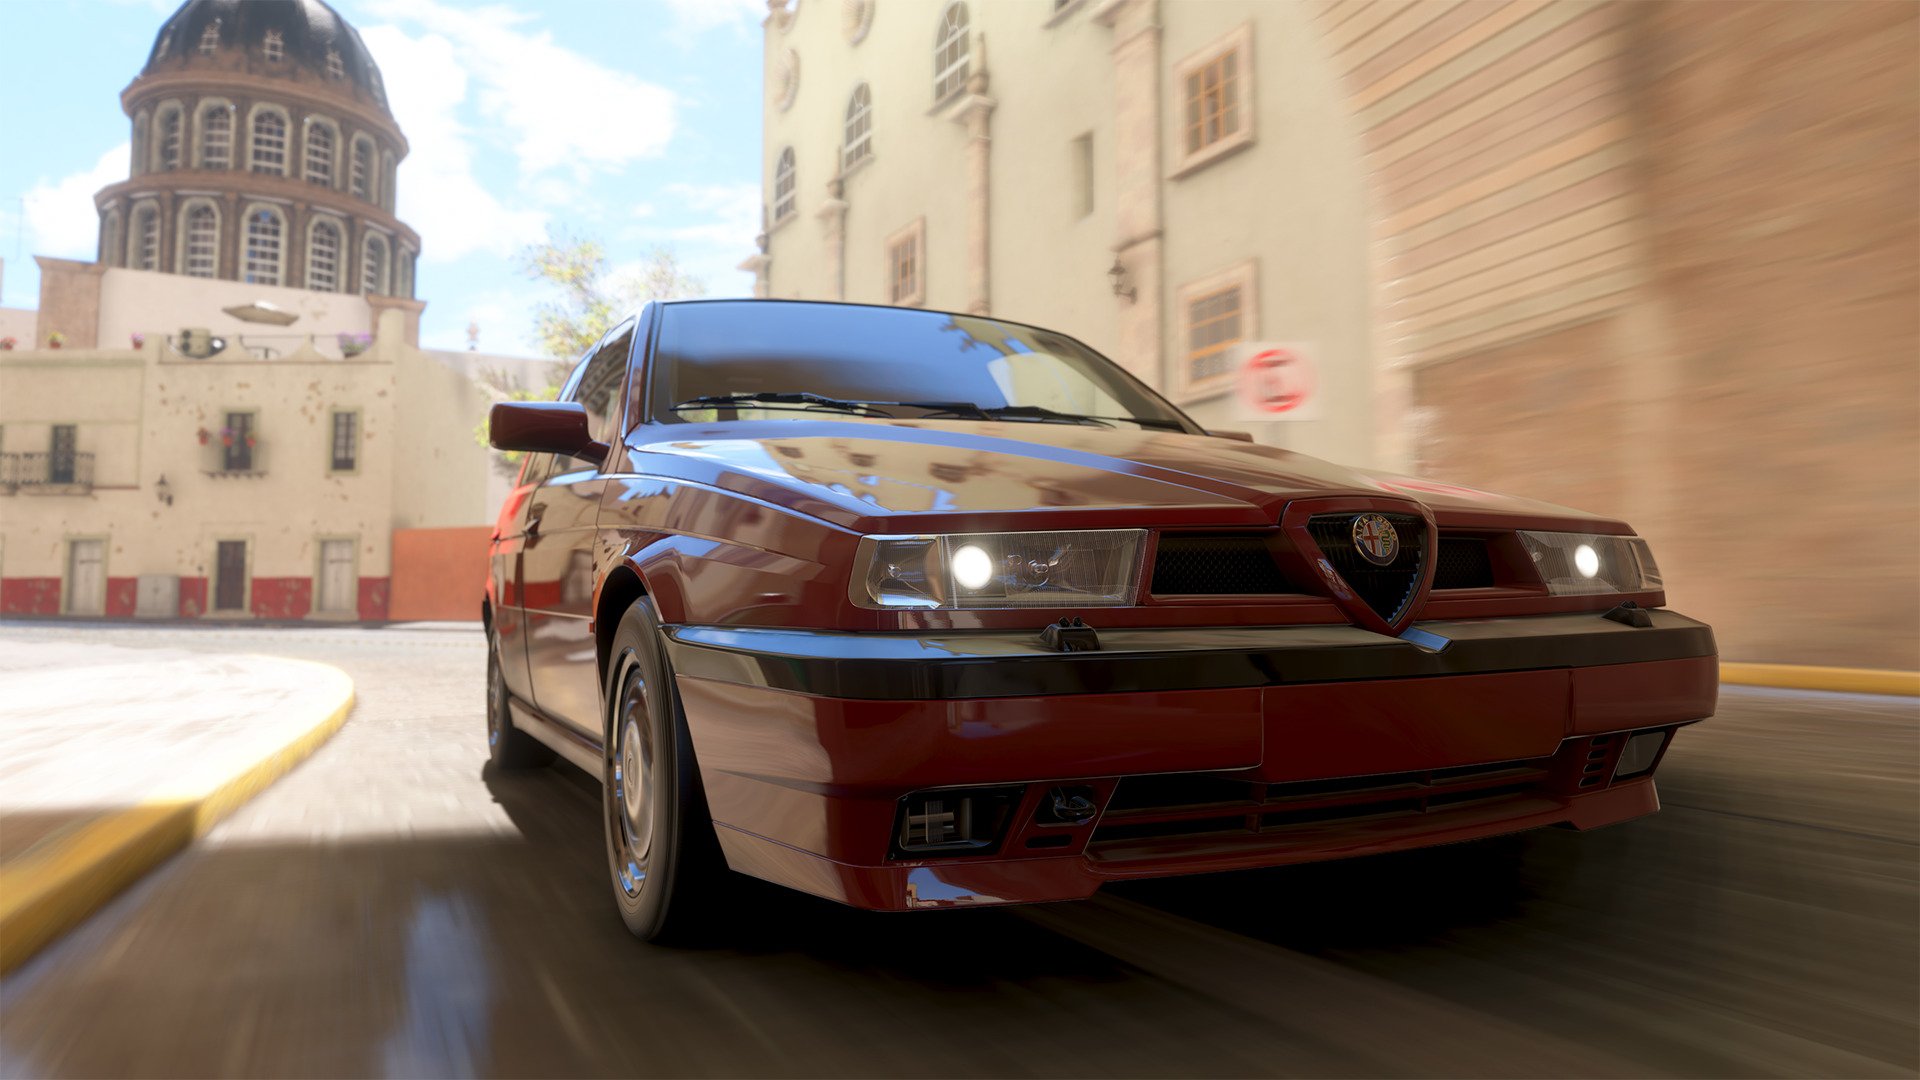 Forza Horizon 5 'Italian Automotive' update brings 23 cars